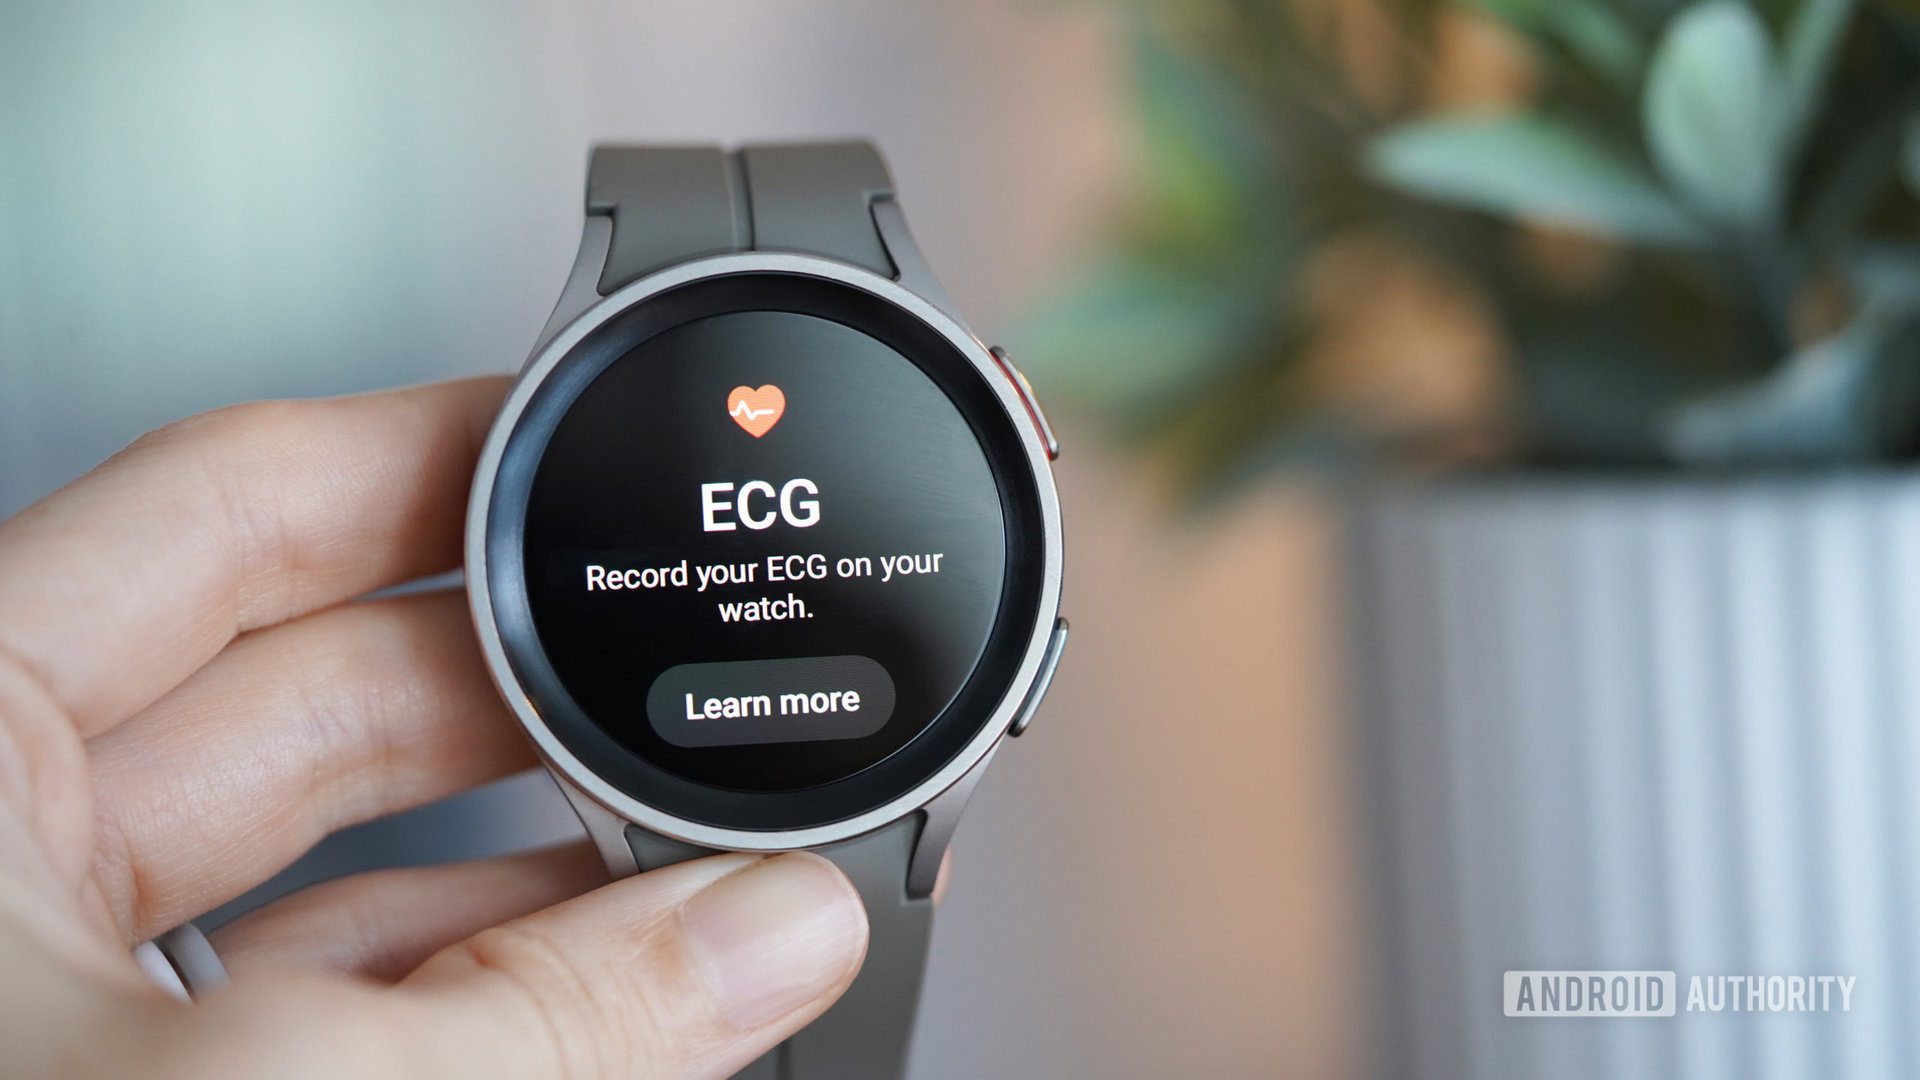 Samsung Galaxy Watch kalp atış hızı bildirimleri, göstergeniz kapalıysa sizi uyarır